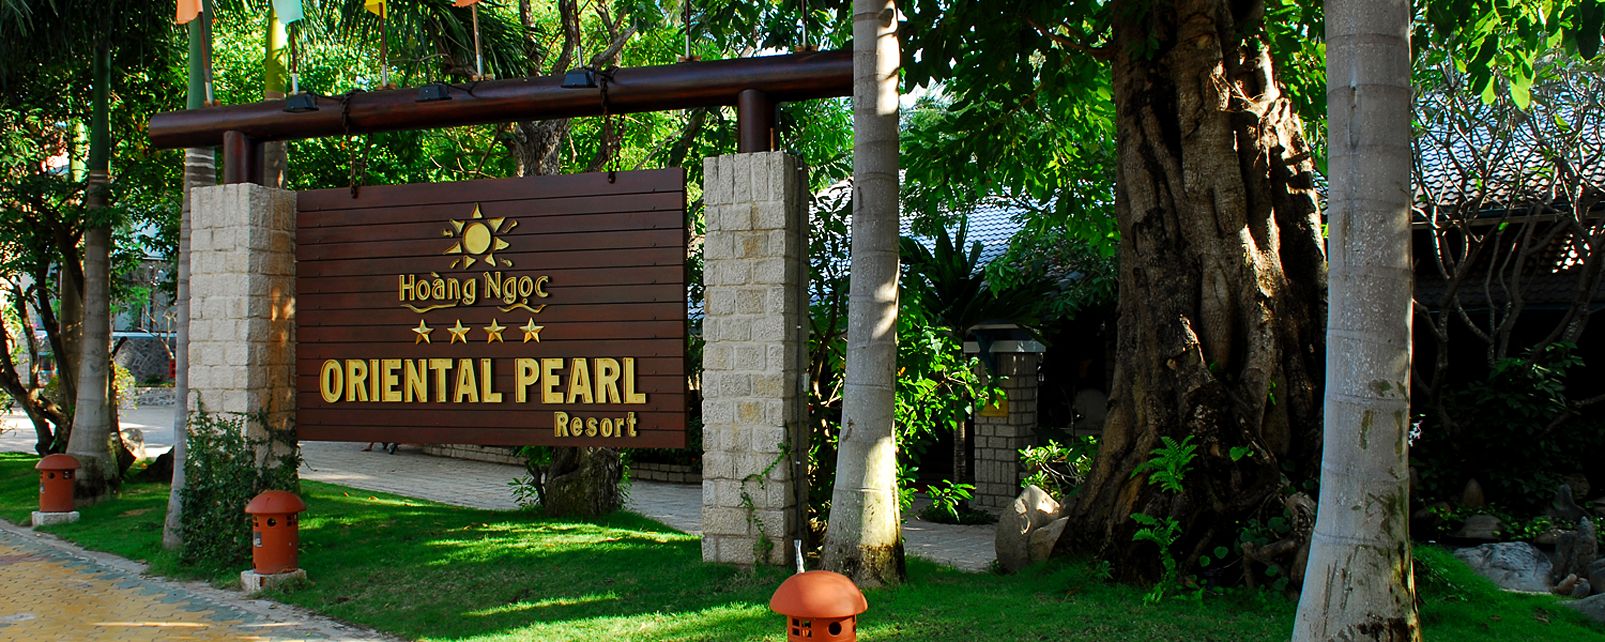 Hotel Hoang Ngoc Resort  (Oriental Pearl)